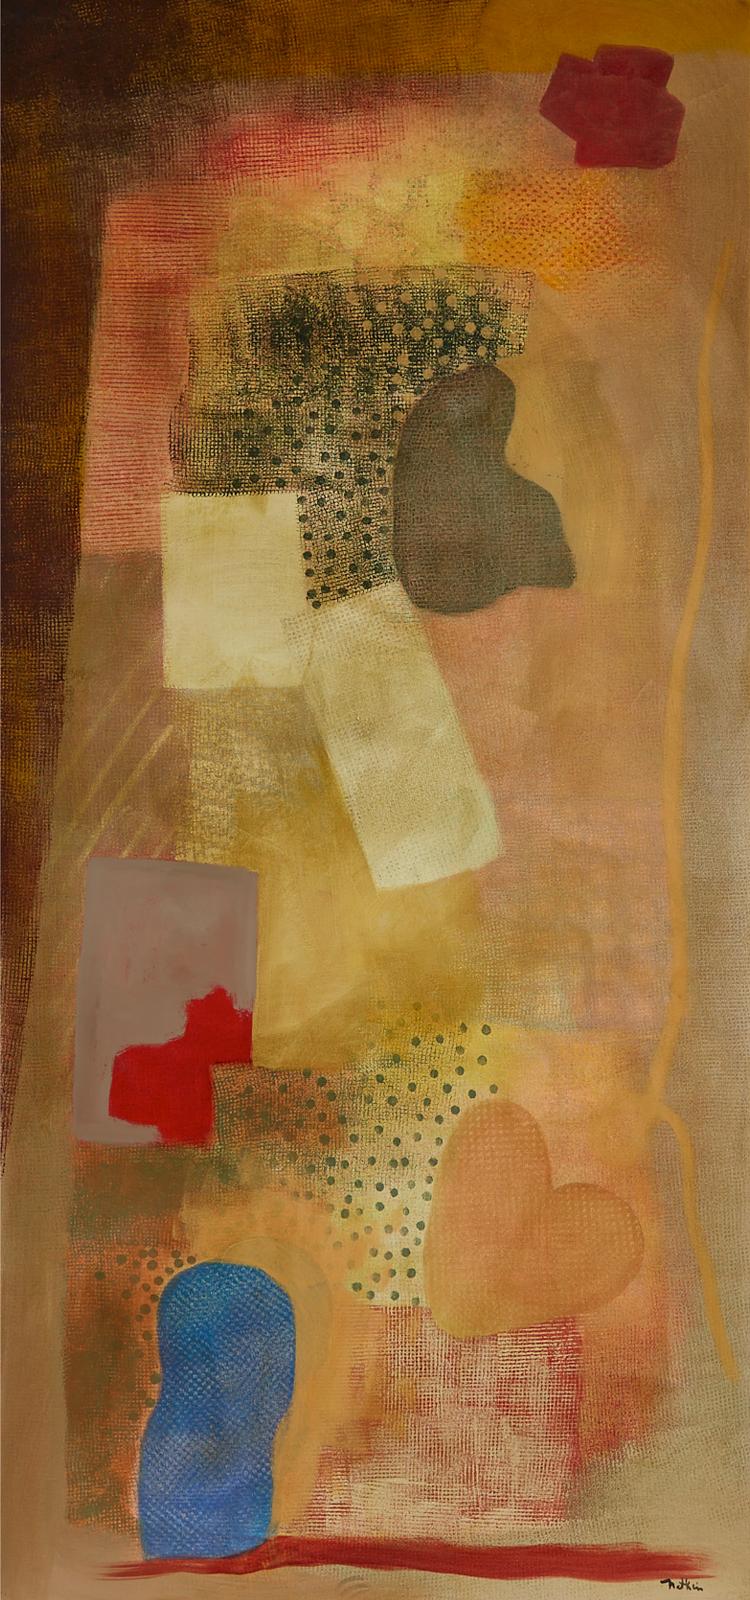 Robert Natkin (1930-2010) - The Golden Painting